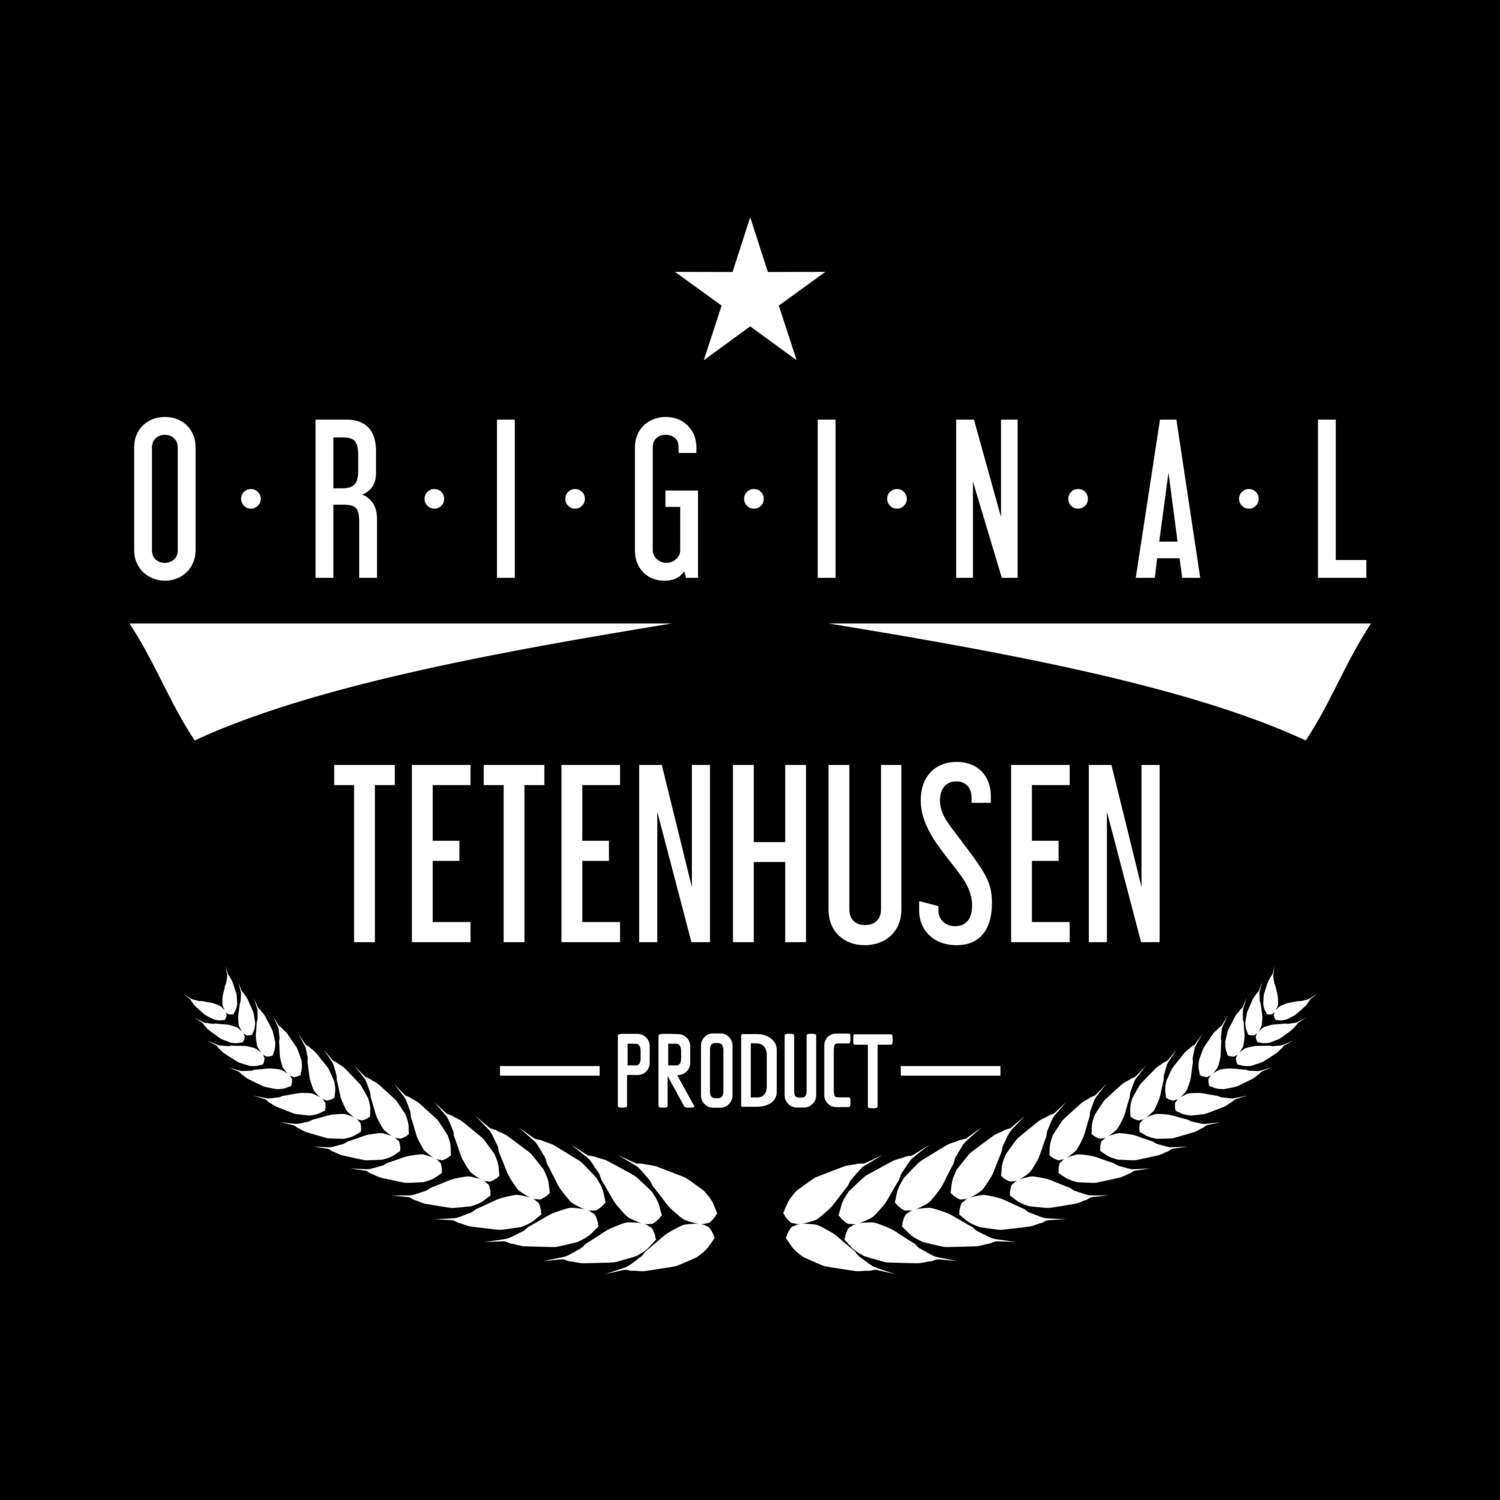 Tetenhusen T-Shirt »Original Product«